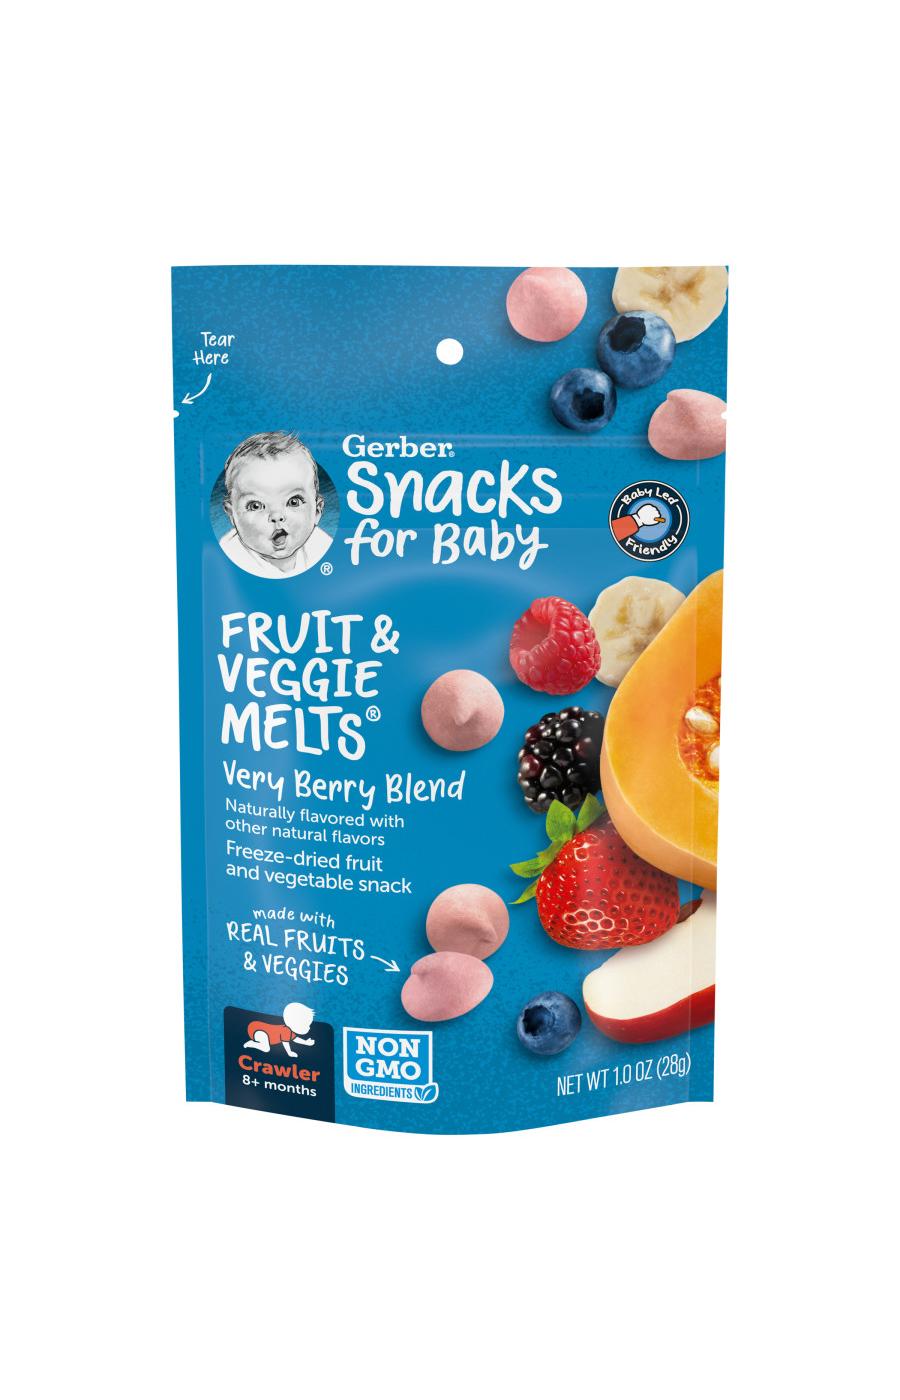 Gerber Snacks for Baby Fruit & Veggie Melts - Very Berry Blend; image 1 of 7